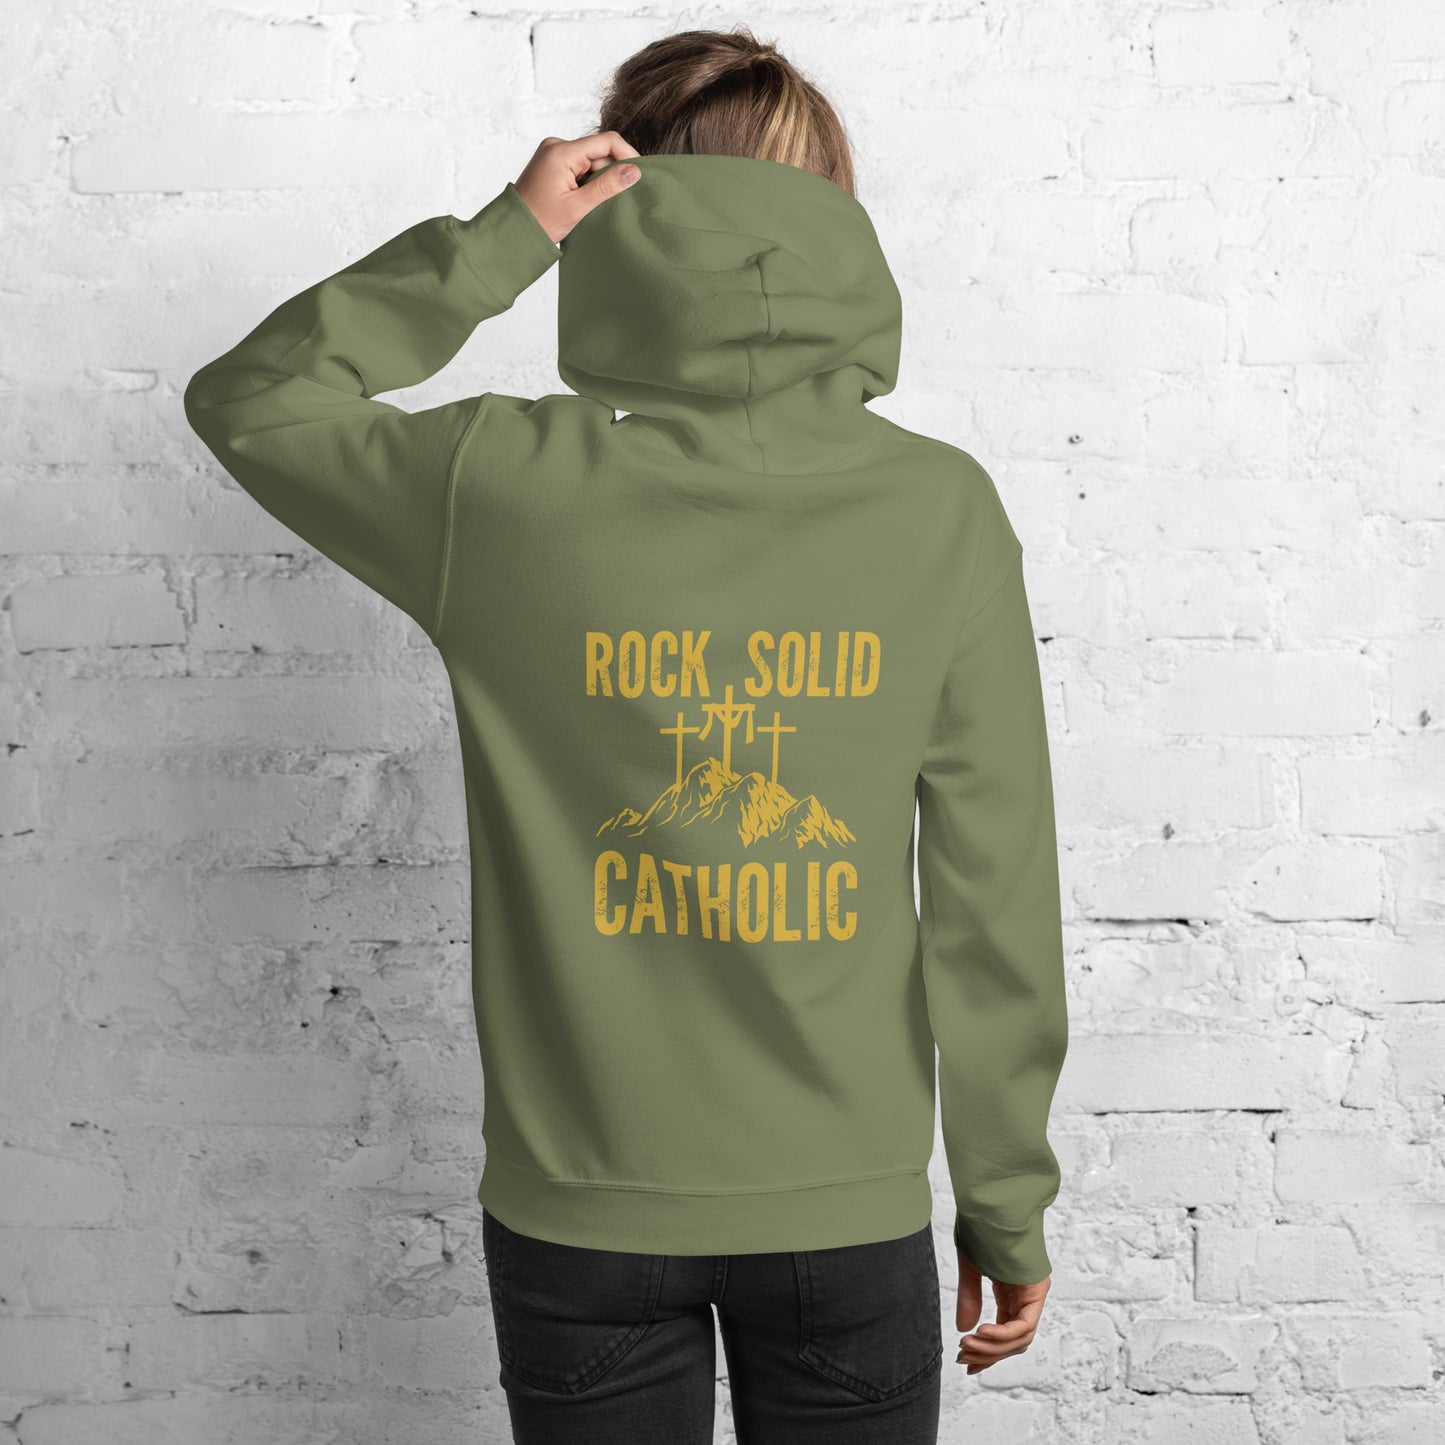 Rock Solid Catholic Women's Hoodie